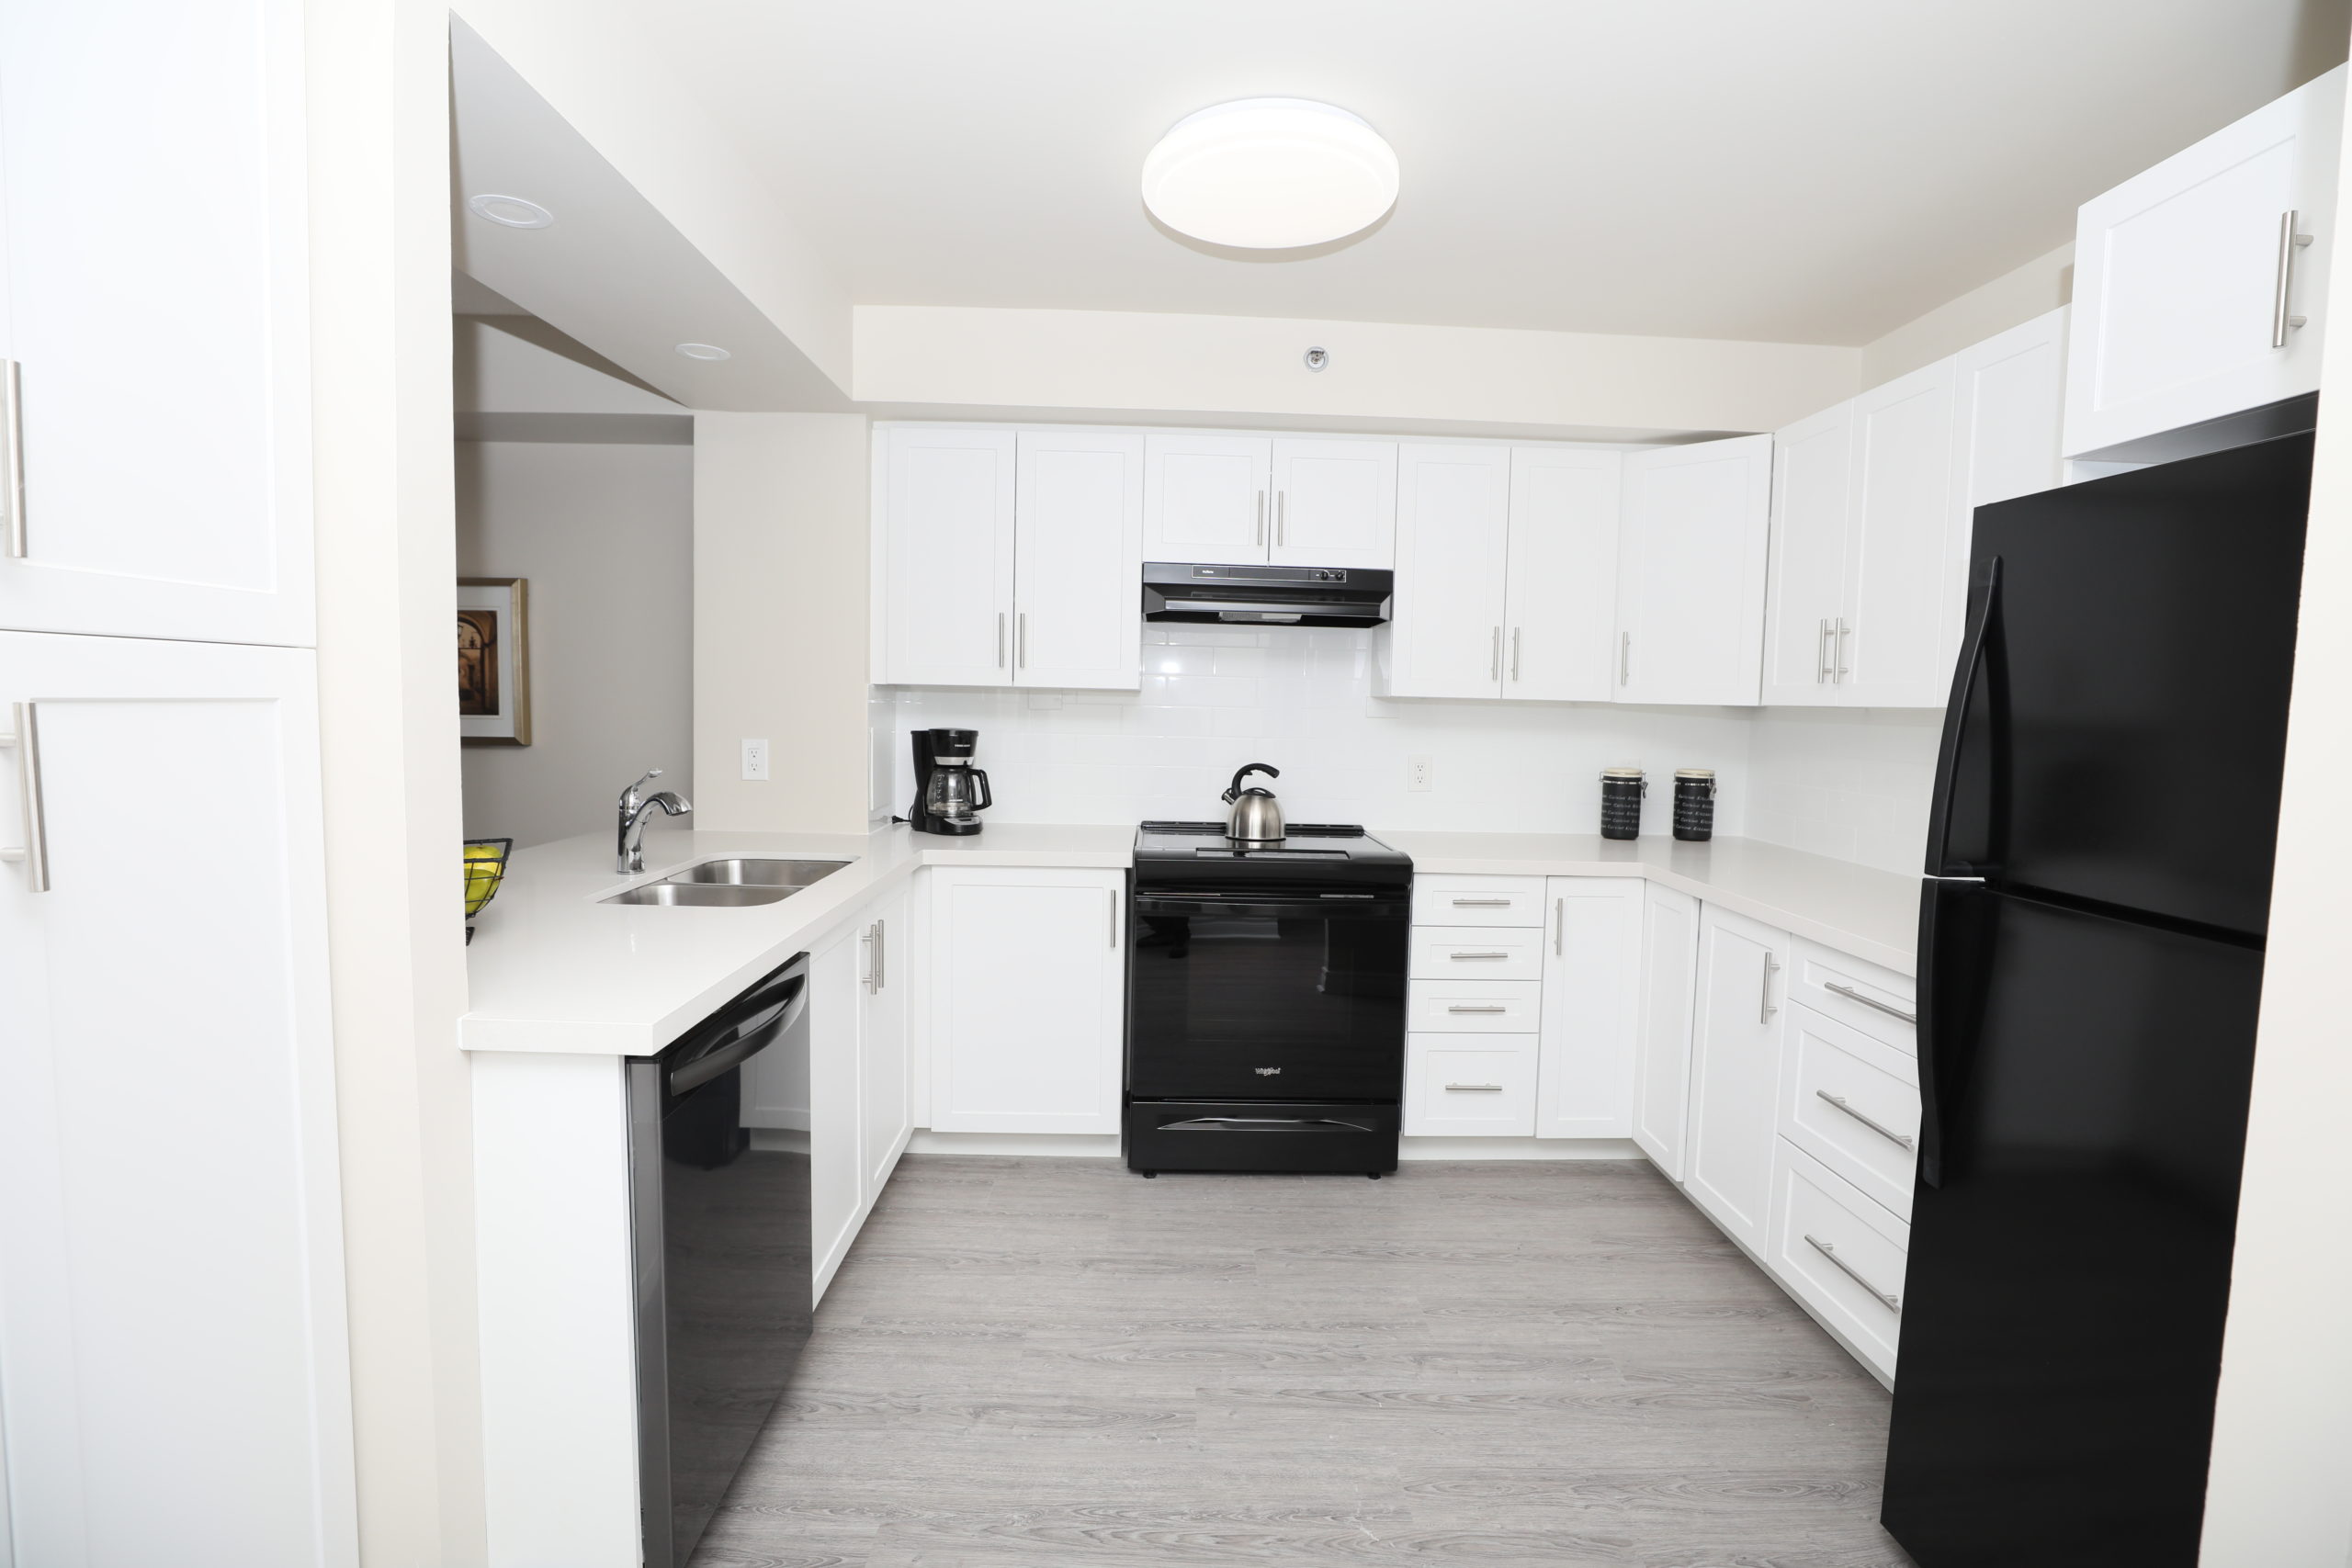 suite image showing kitchen